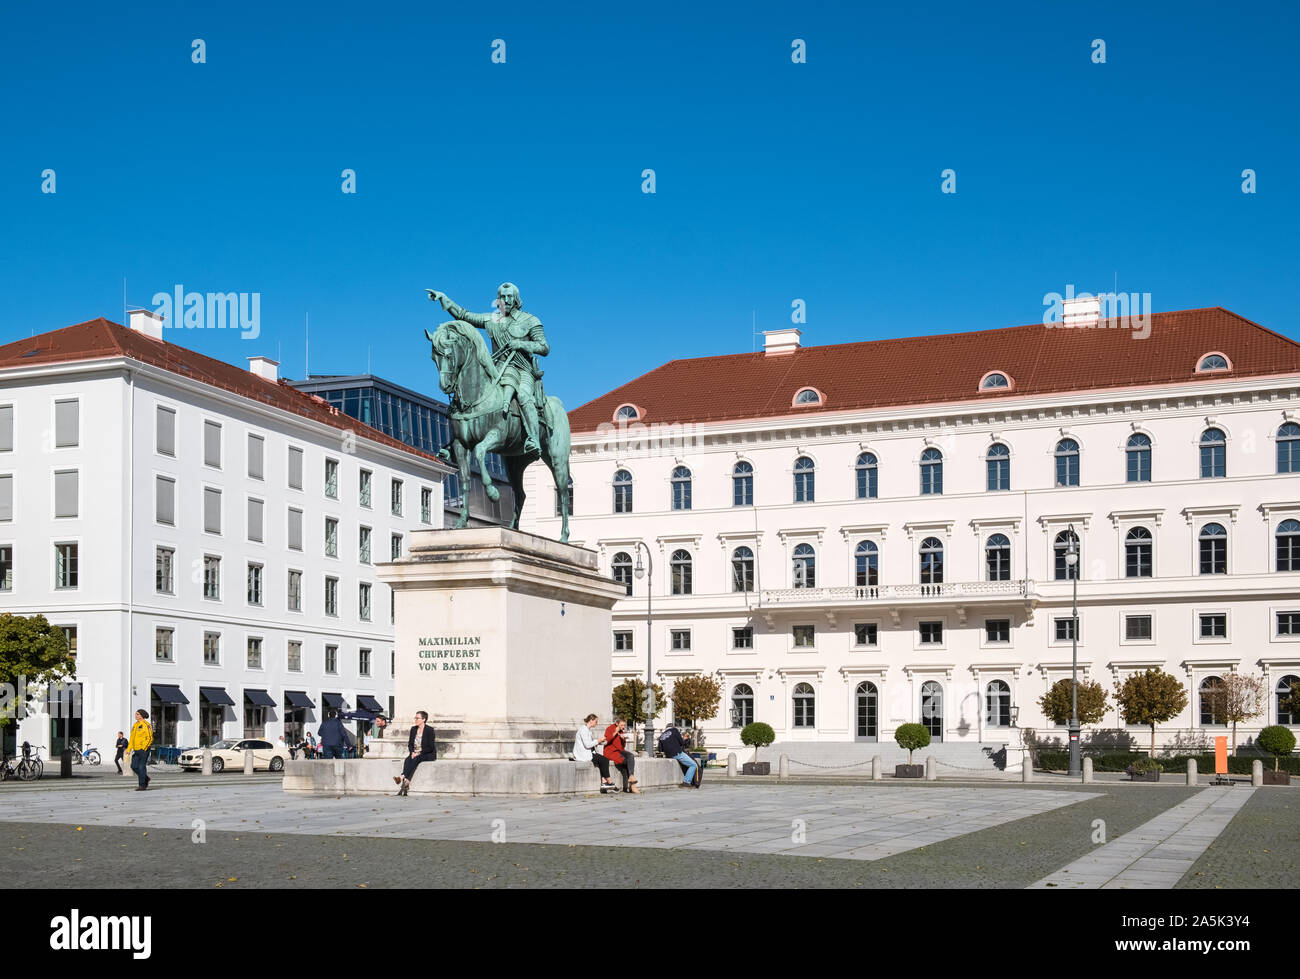 Wittelsbacher Square, Munich, Alemania. Memorial estatua ecuestre a Maximiliano Emanuel Kurfurst, ex gobernante de Baviera, Alemania. Foto de stock